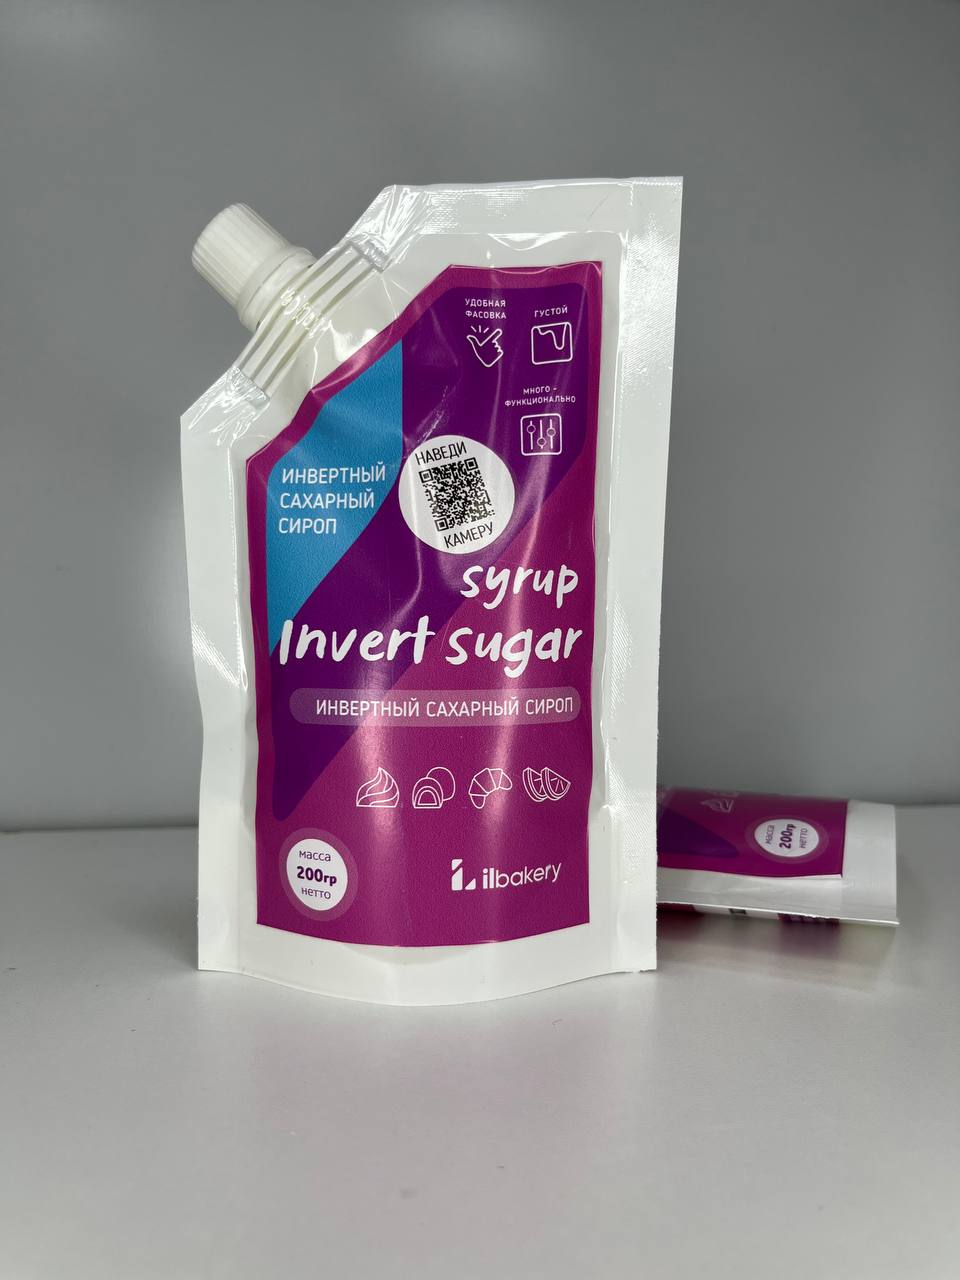 Инвертный сахар это. Инвертный сахарный сироп. Инвертированный сахарный сироп. Инвертированный сахар. Инвертный сироп 200.